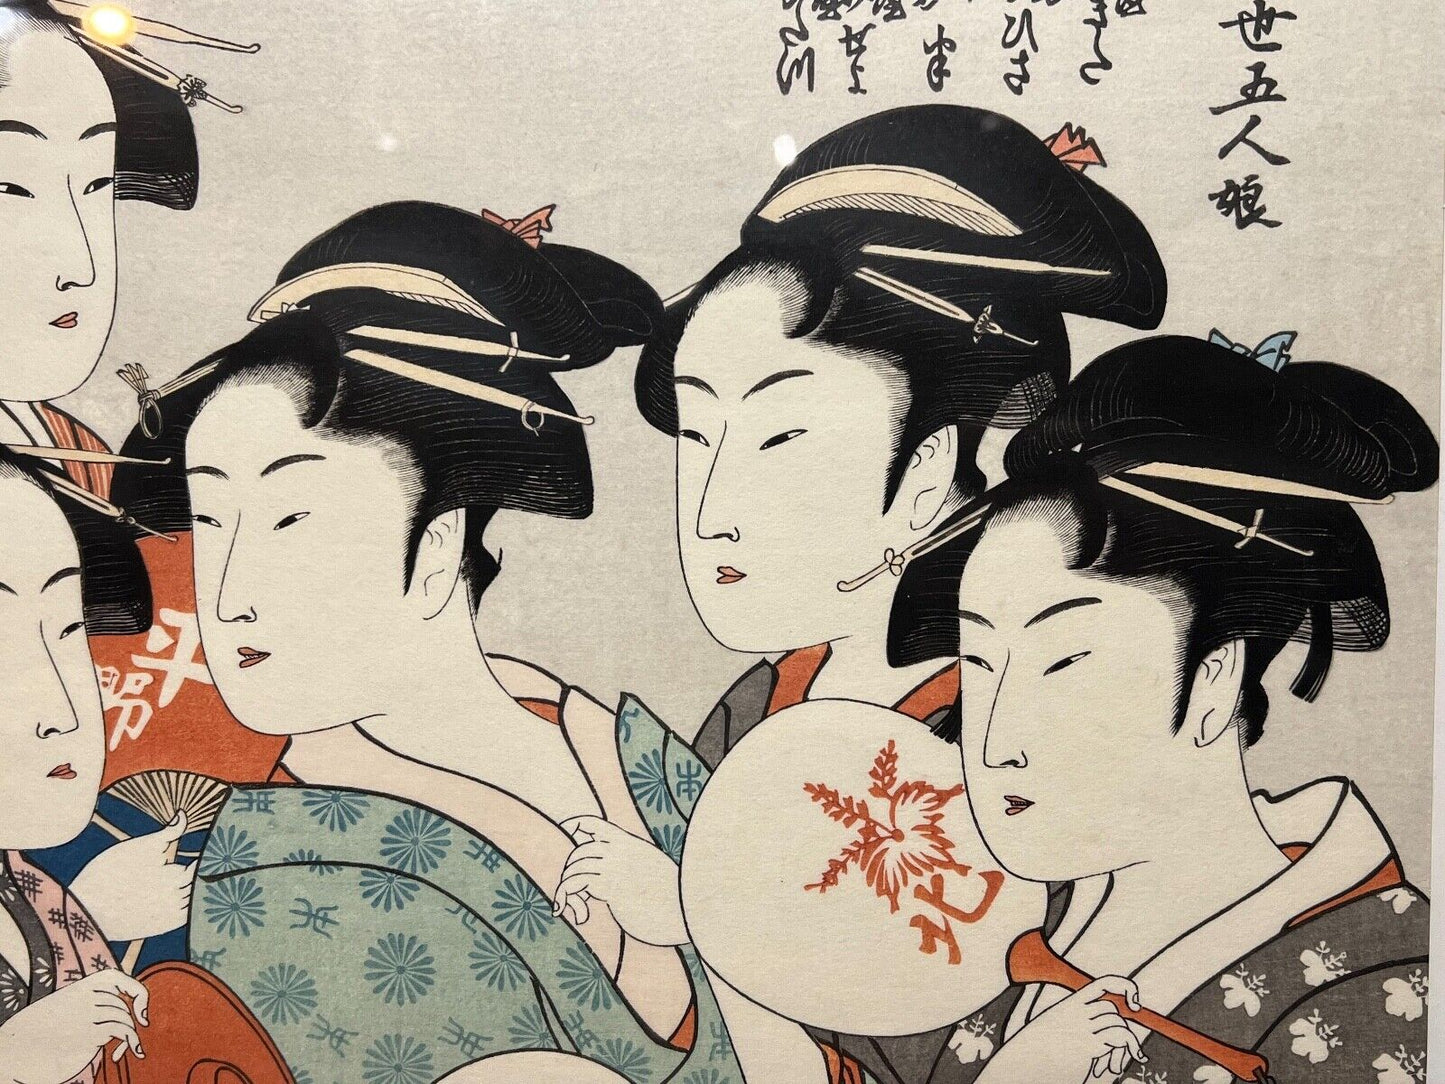 Japanese Woodblock Print Reproduction: By Utamaro Bijinga "Five Beauty" Print